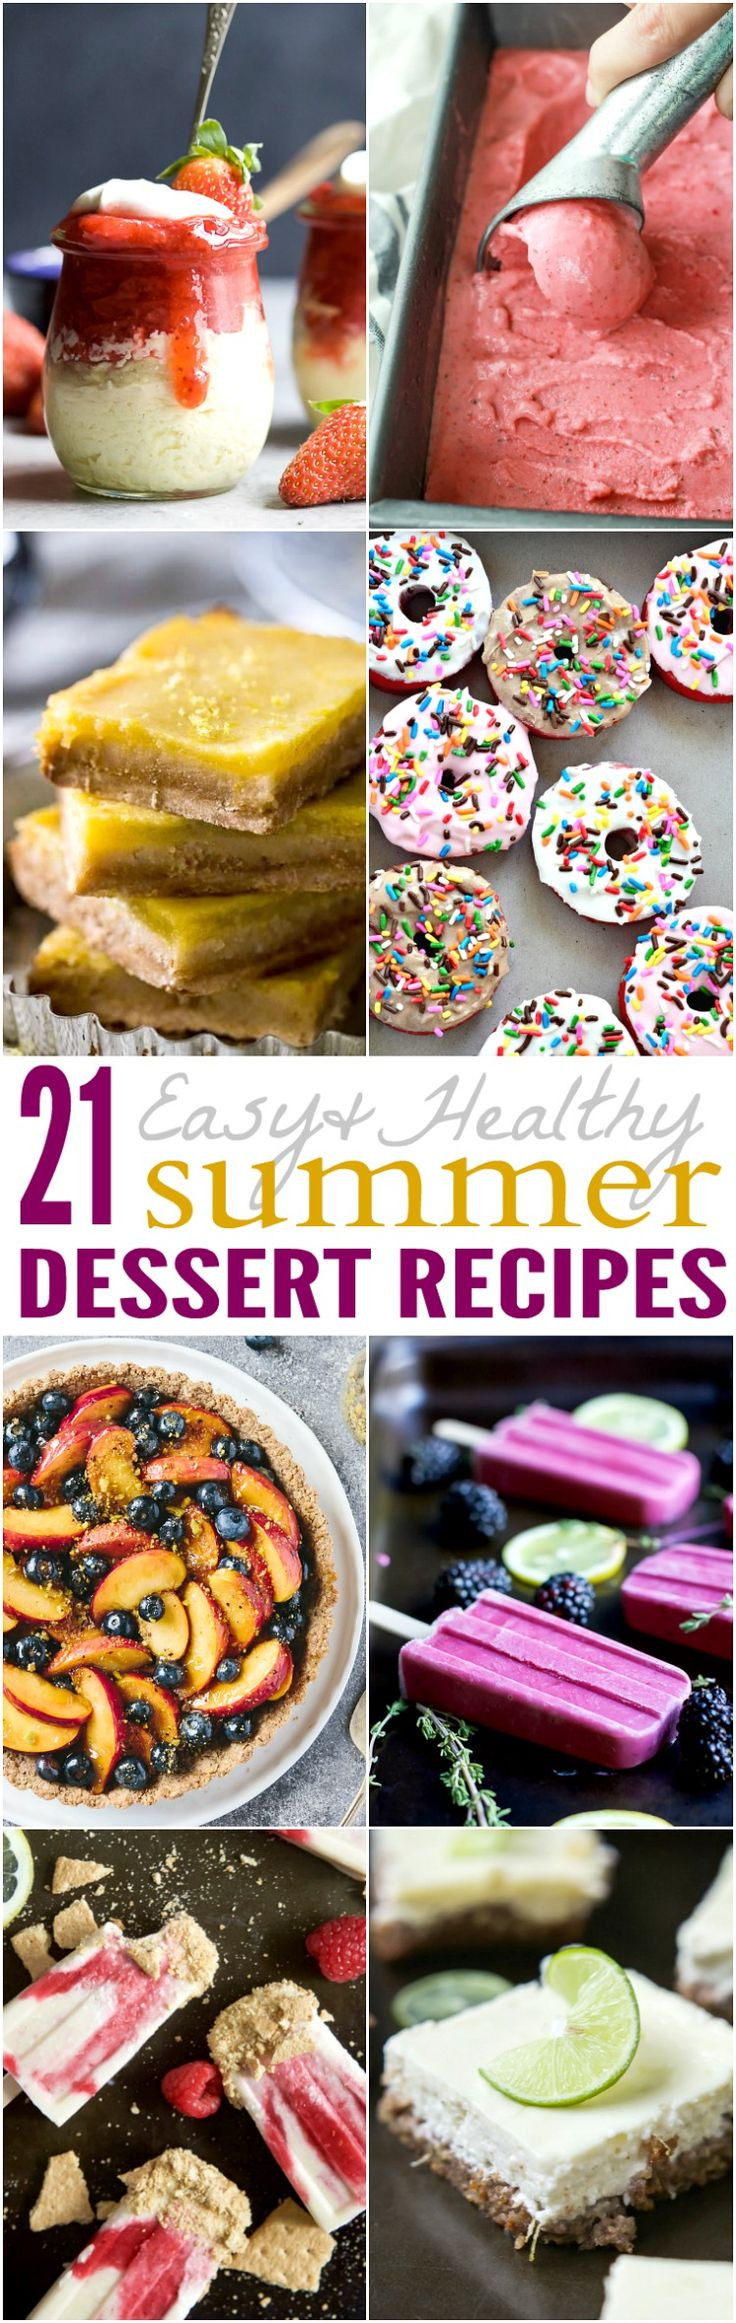 Summer Party Dessert Ideas
 25 best ideas about Healthy summer snacks on Pinterest